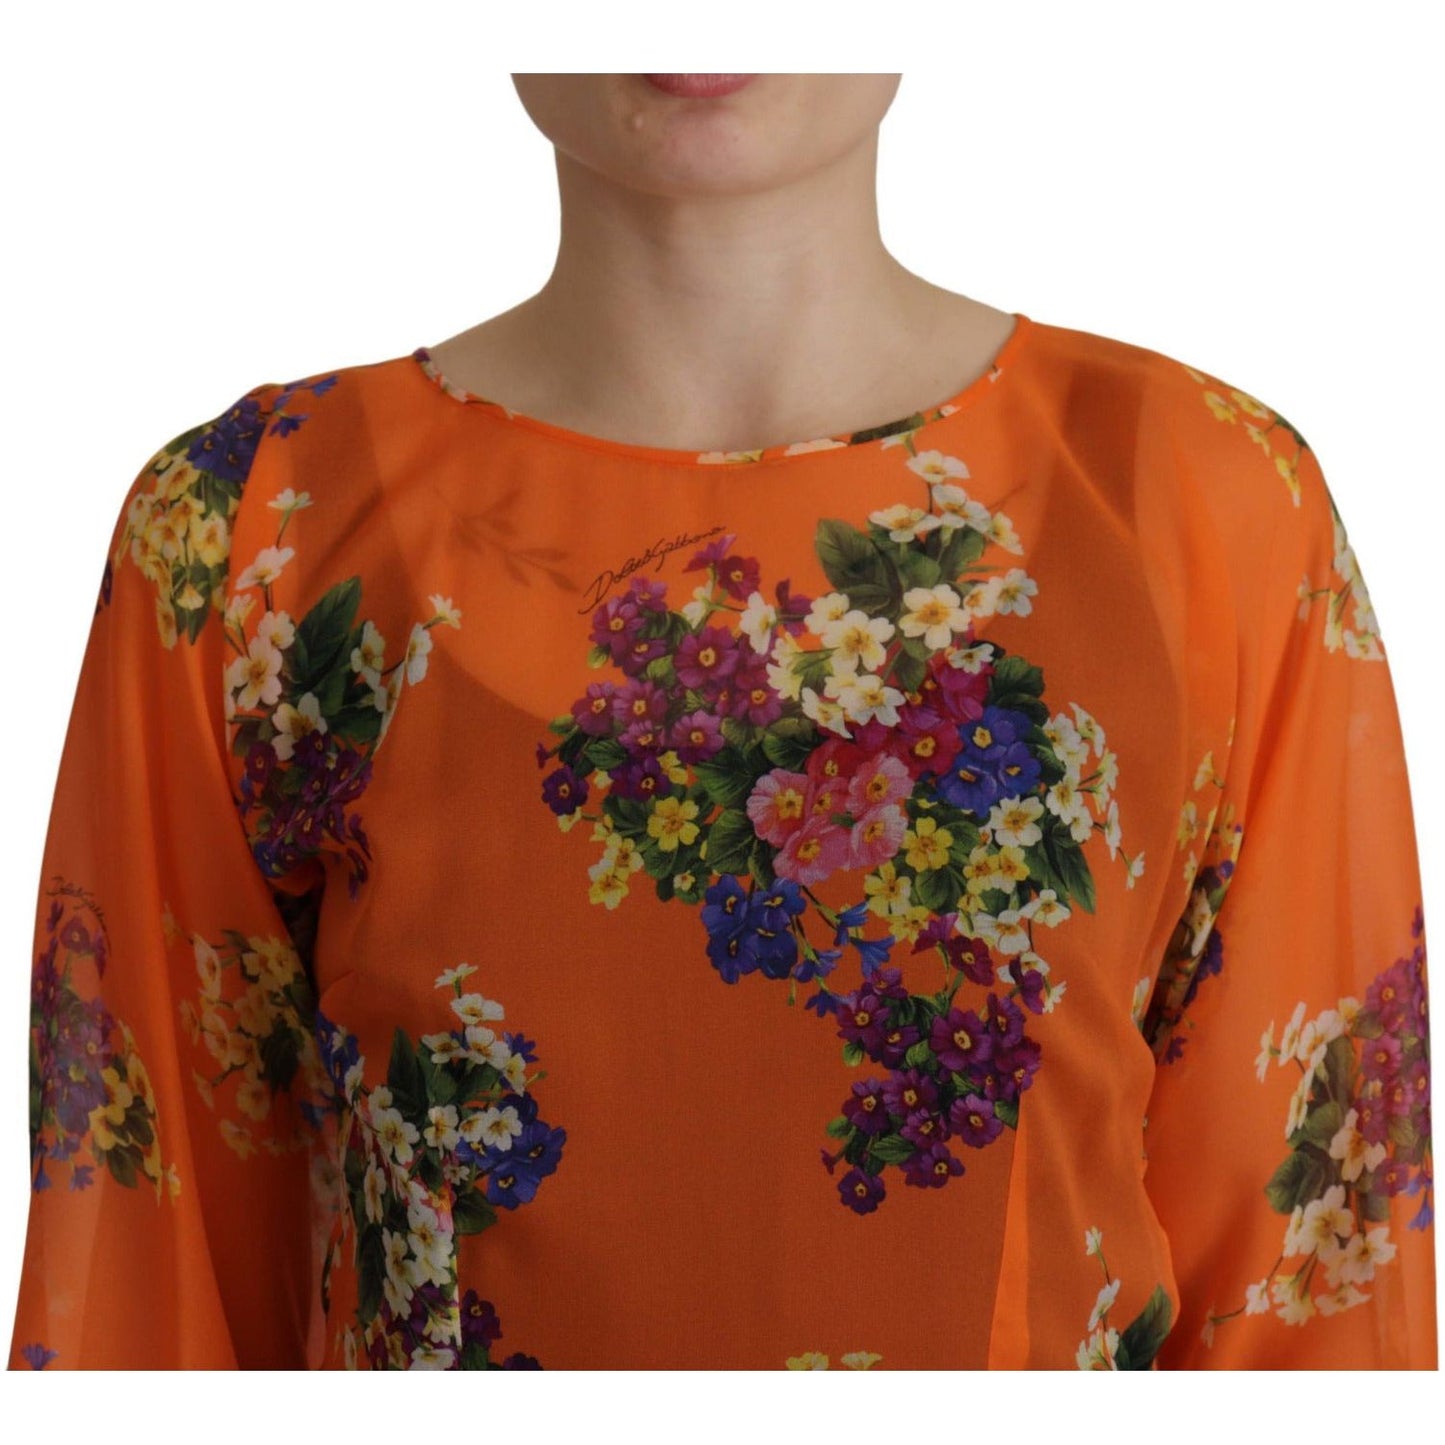 Dolce & Gabbana Elegant Floral Silk Blouse with Back Zipper orange-floral-print-long-sleeve-blouse IMG_4519-scaled-d67de3a4-5e9.jpg